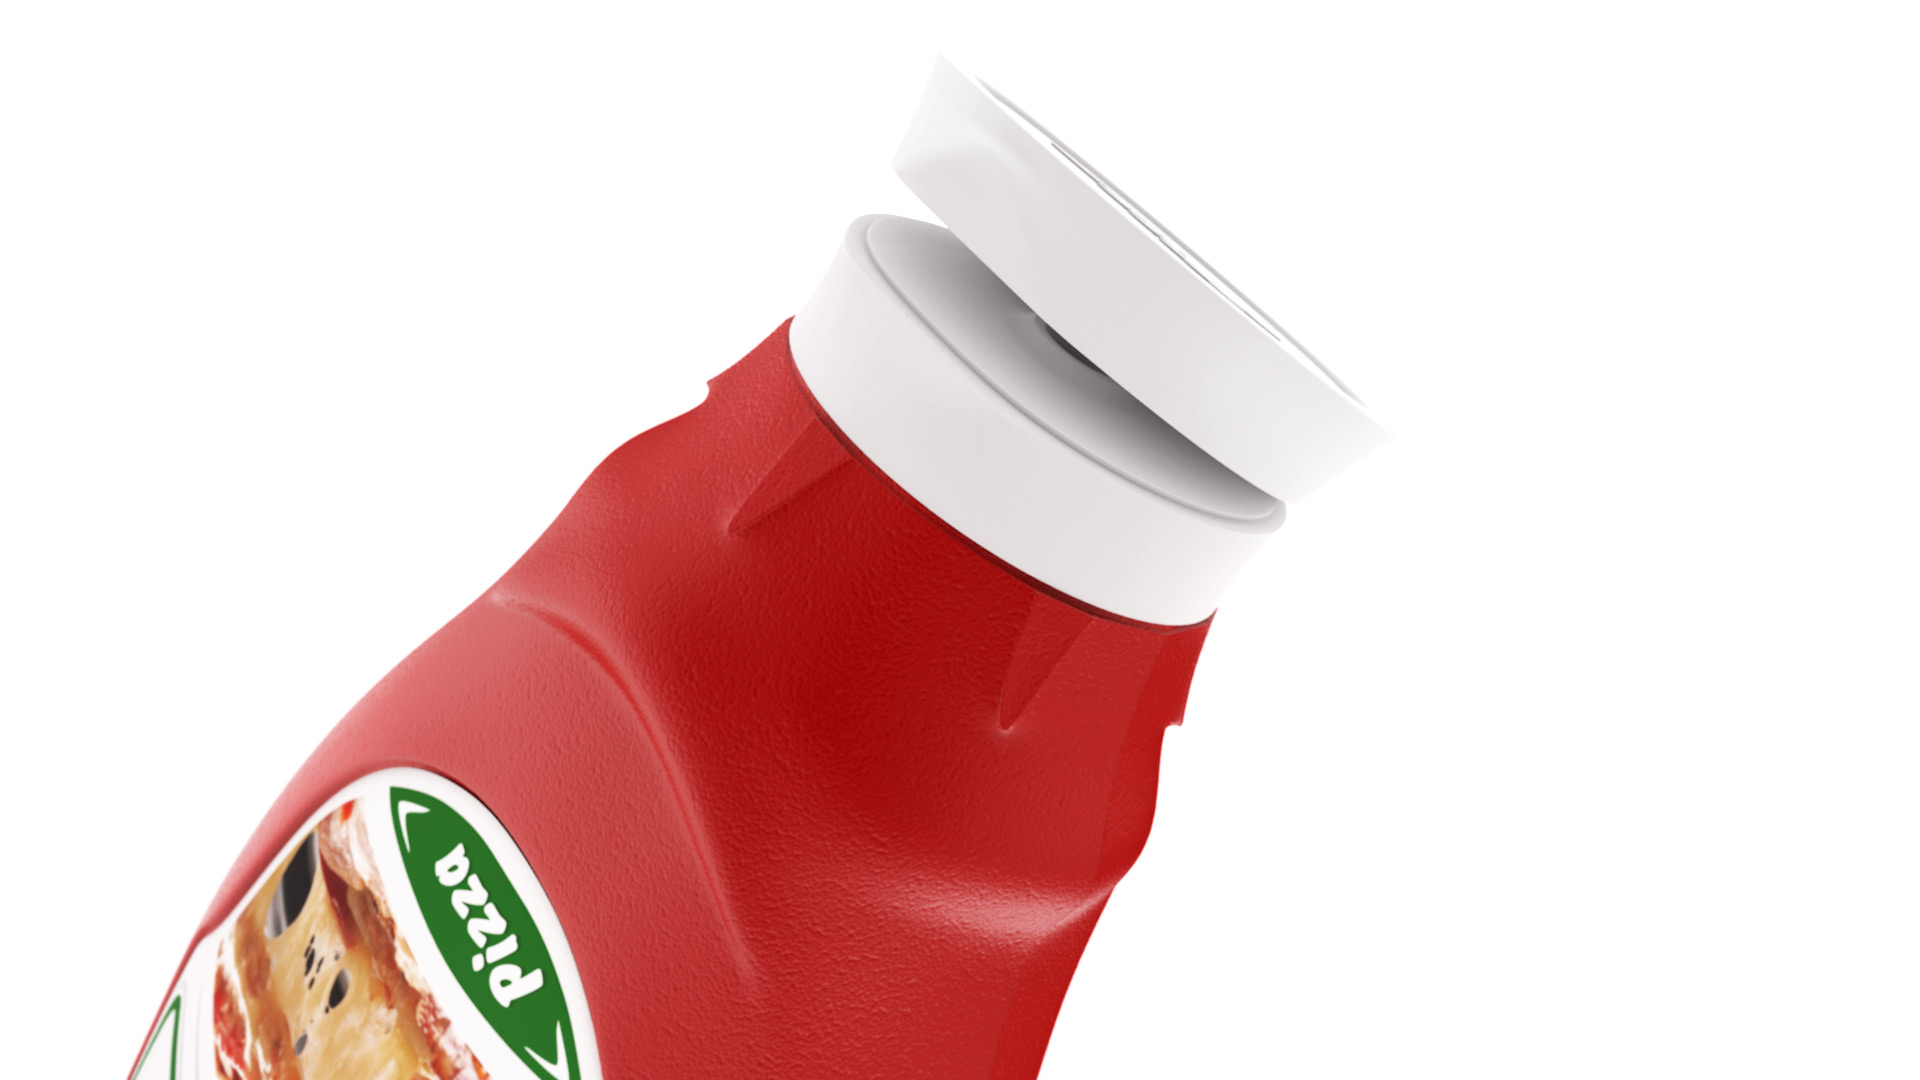 Vital tomato ketchup packaging design - bottle cap open